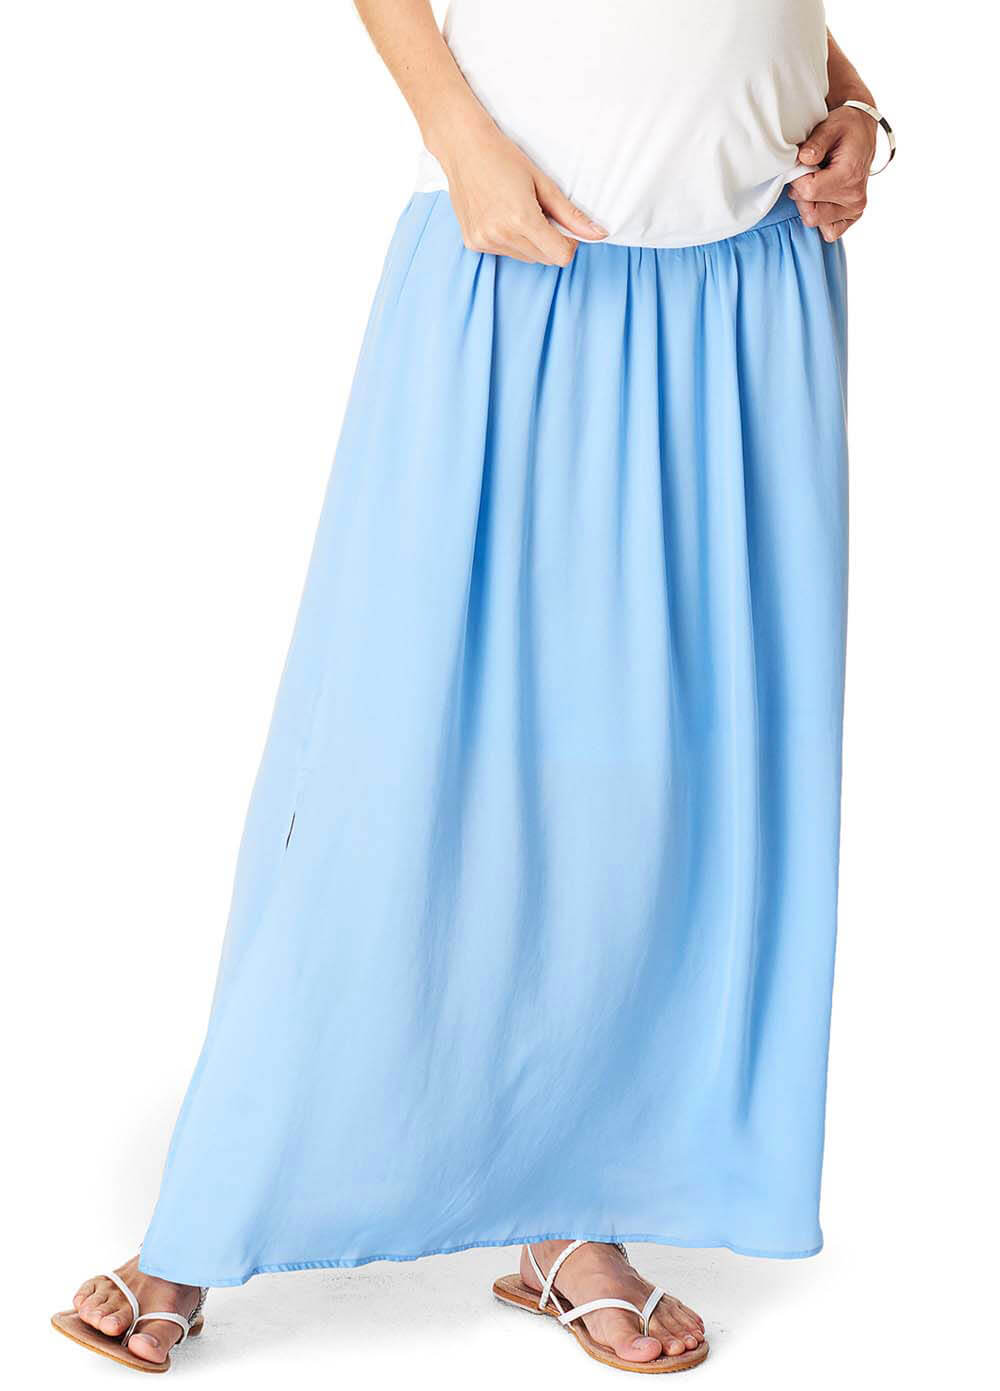 Esprit - Sky Blue Gathered Maxi Skirt - ON SALE